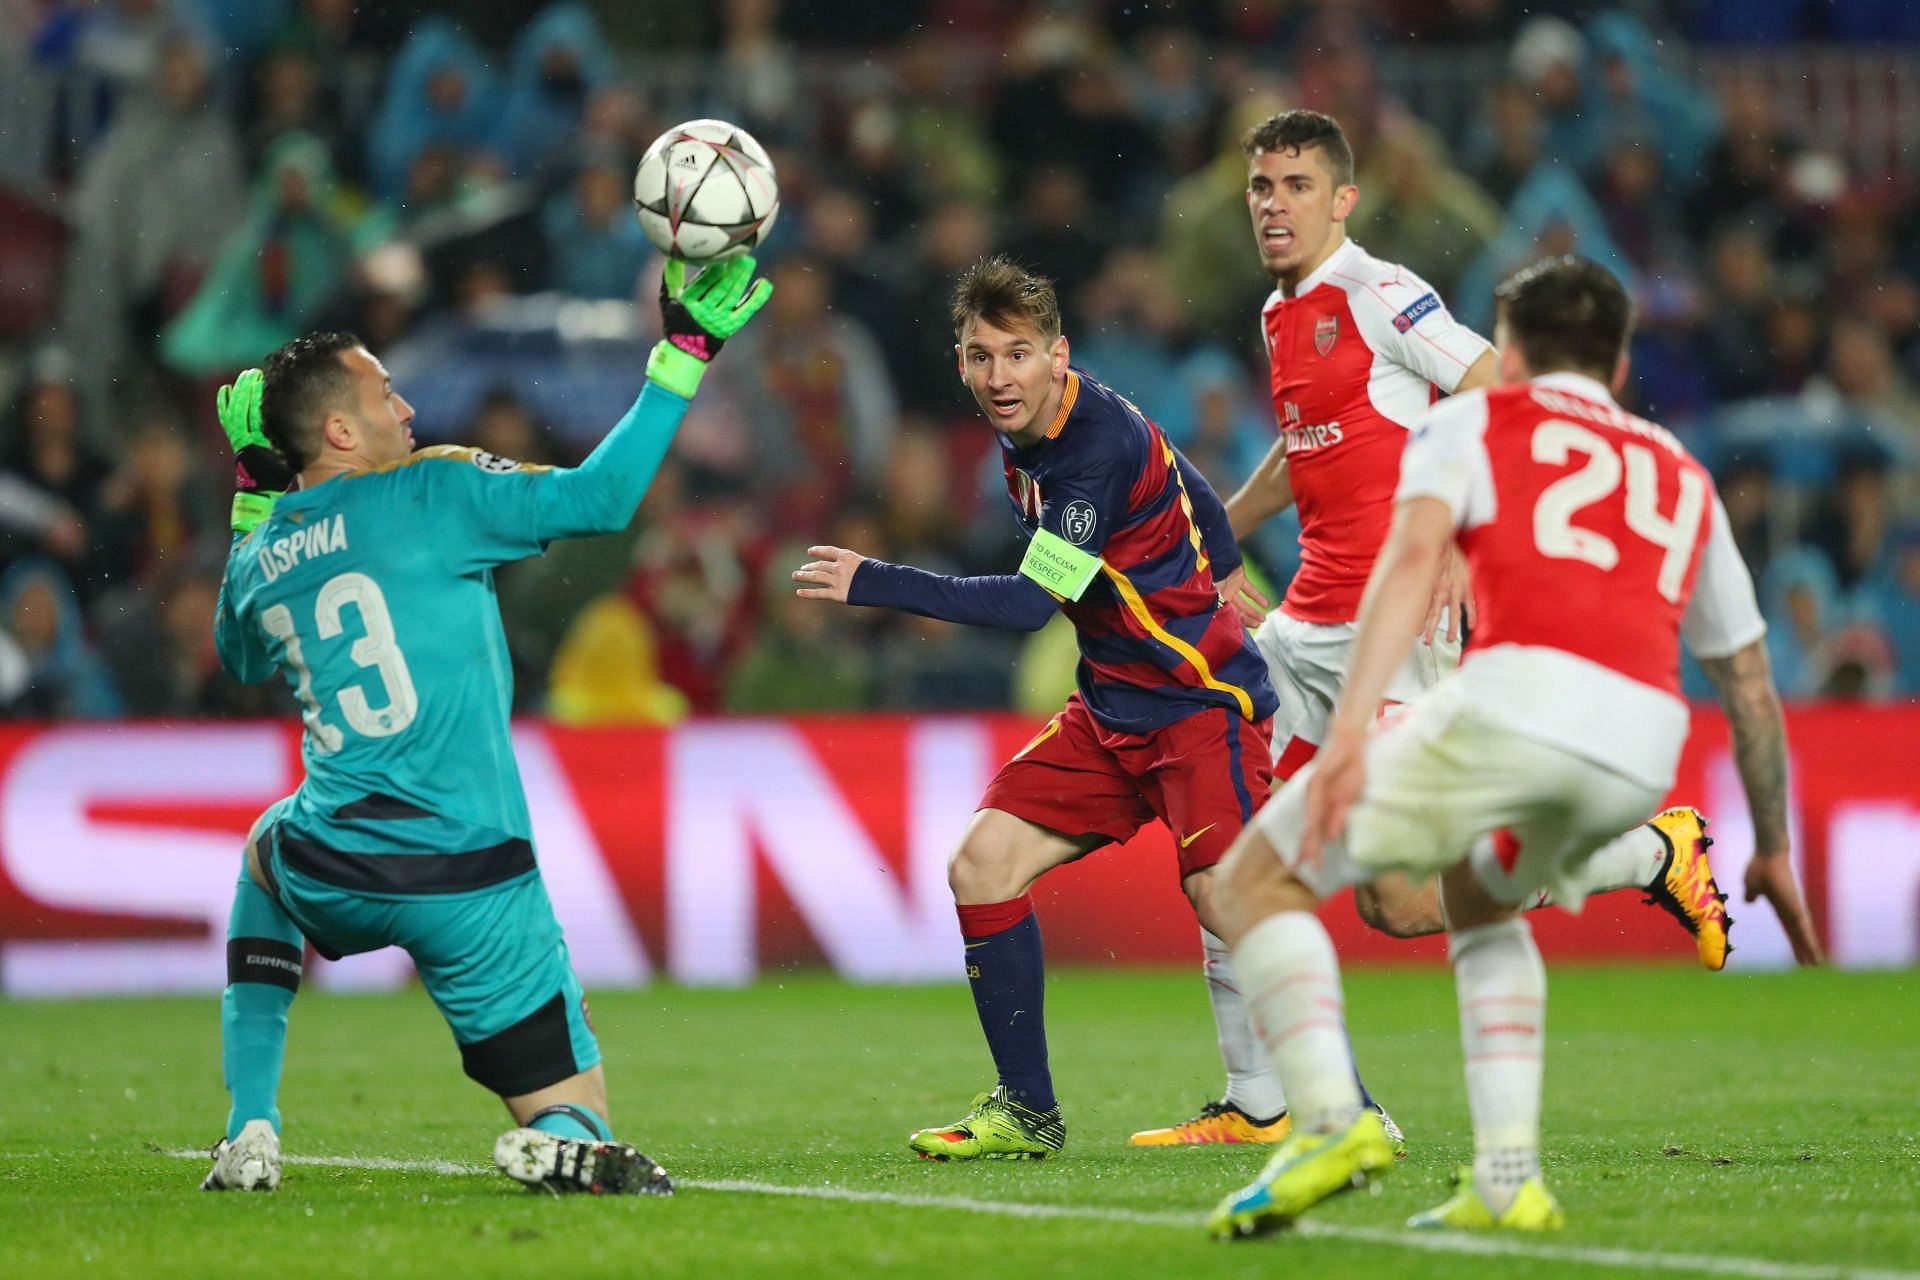 FC Barcelona v Arsenal FC - UEFA Champions League Round of 16: Second Leg